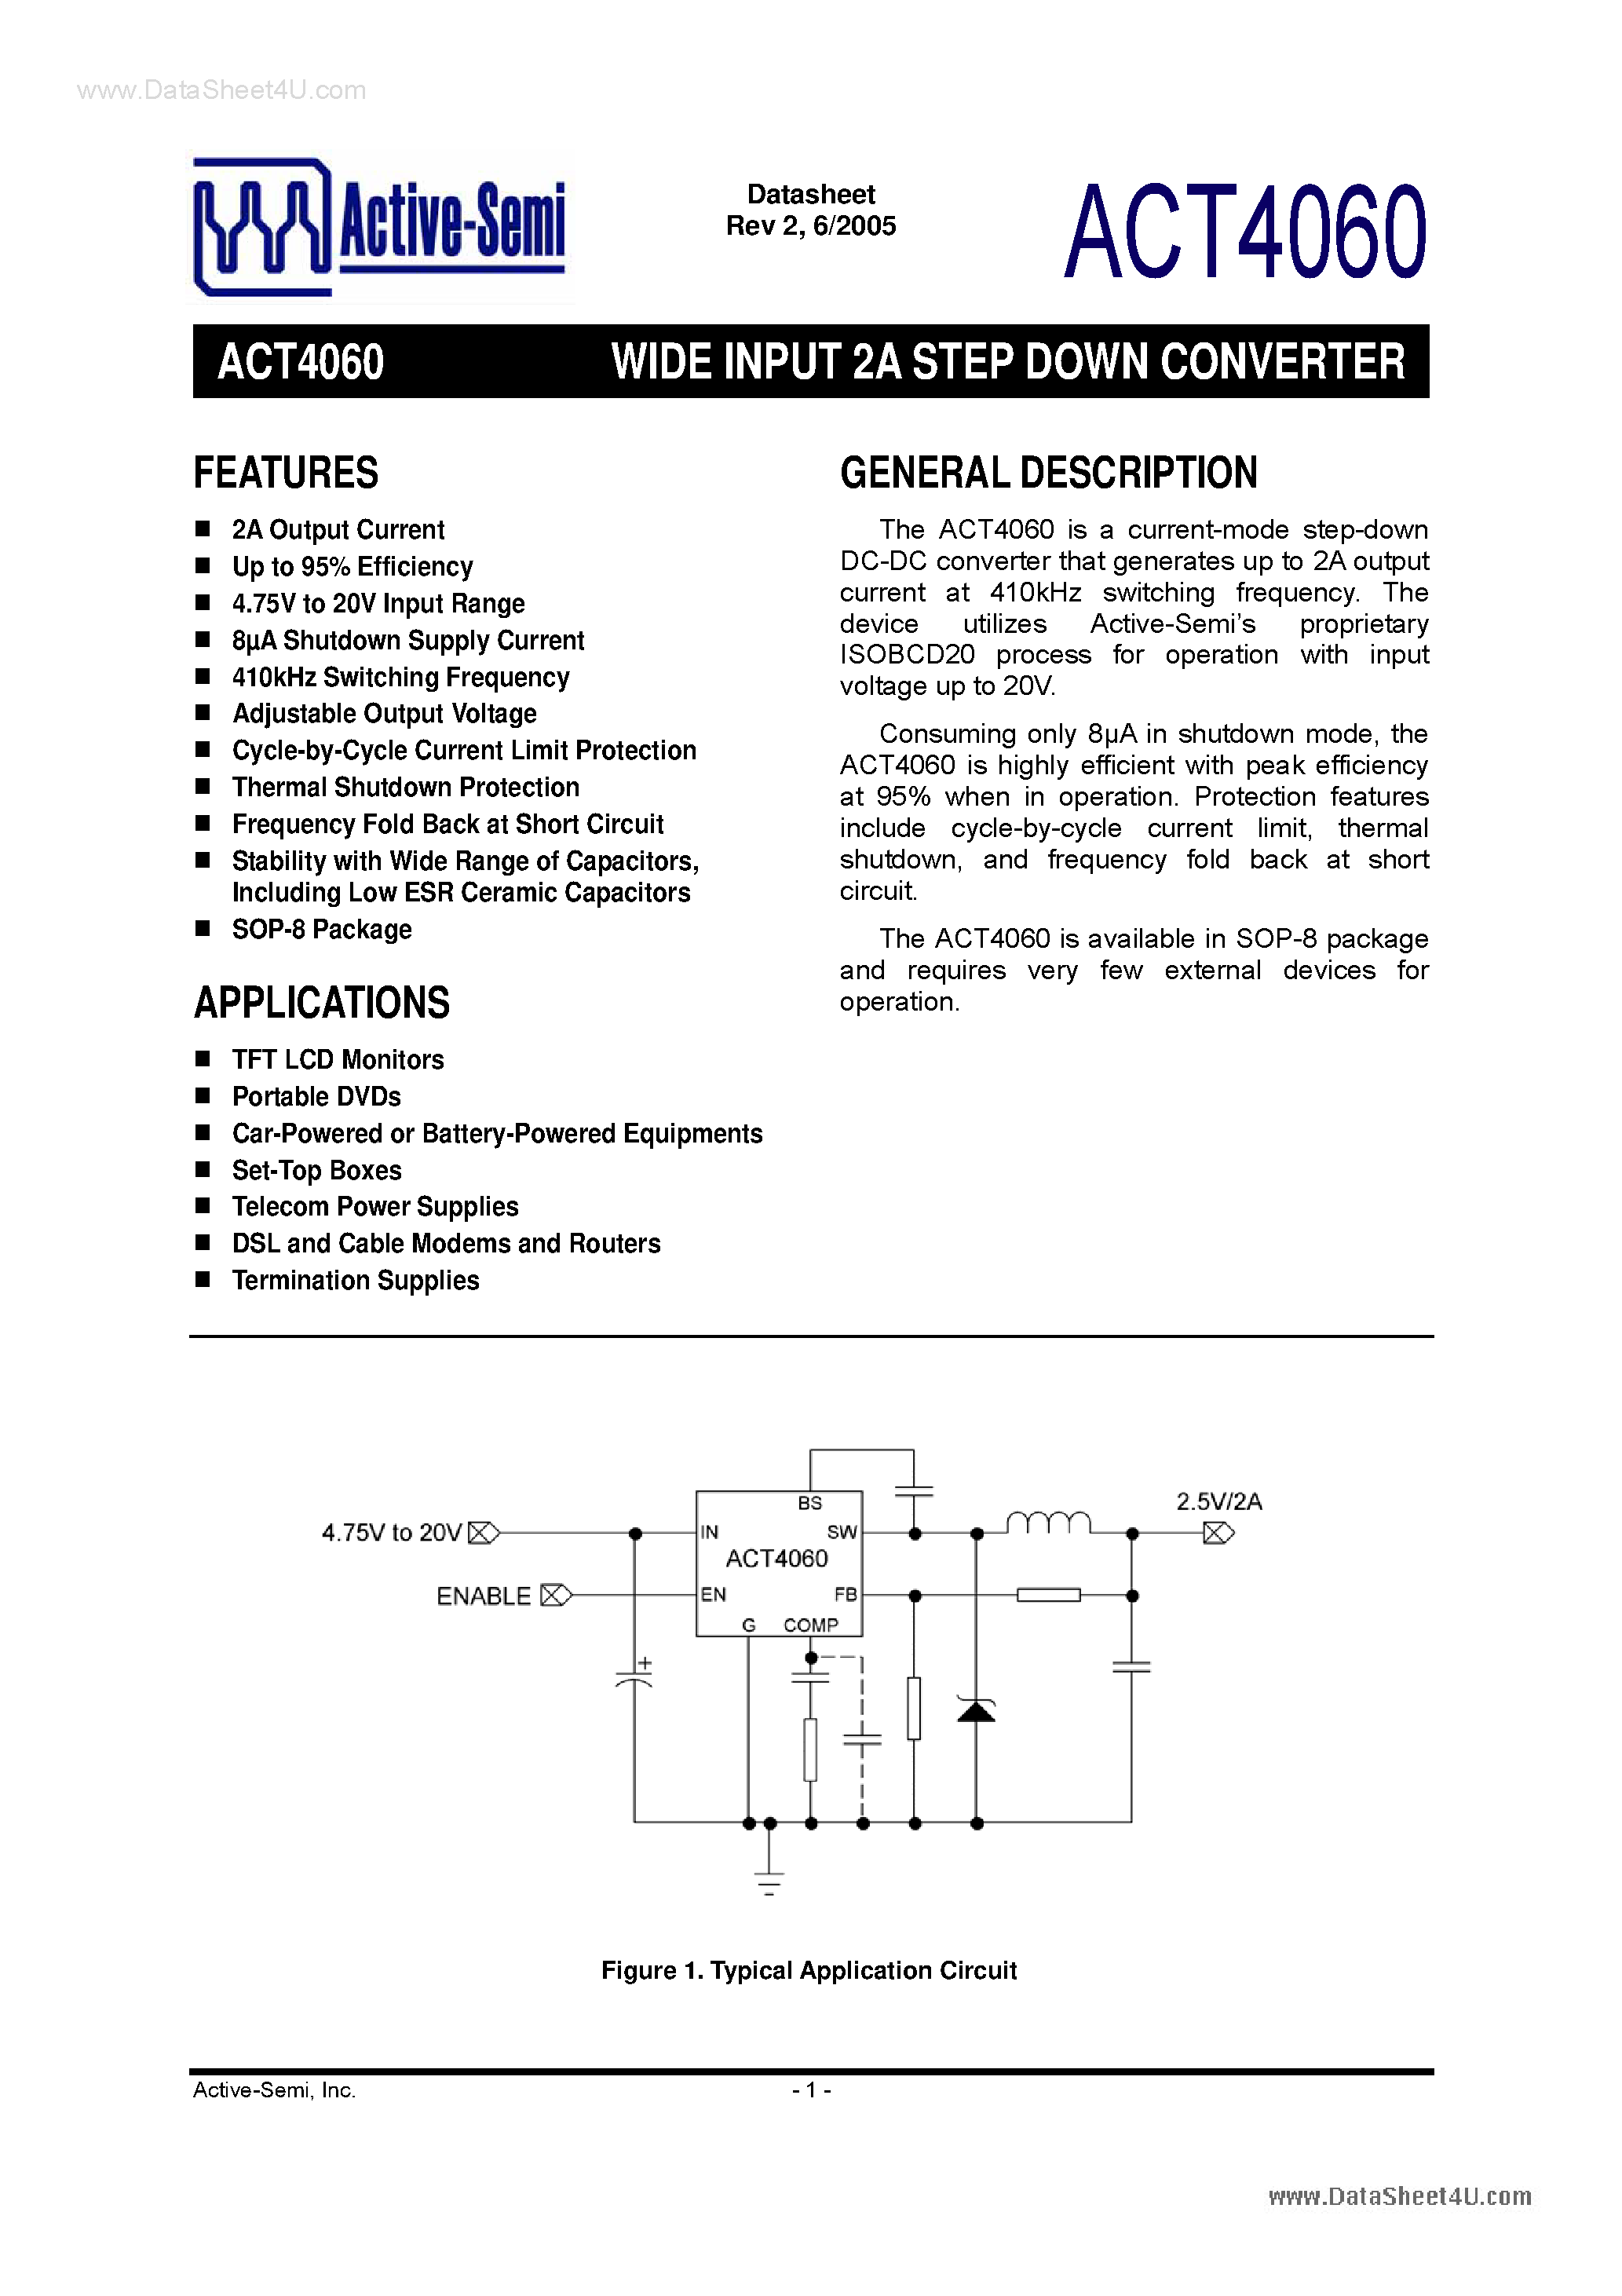 Даташит ACT4060 - Wide Input 2A Step Down Converter страница 1